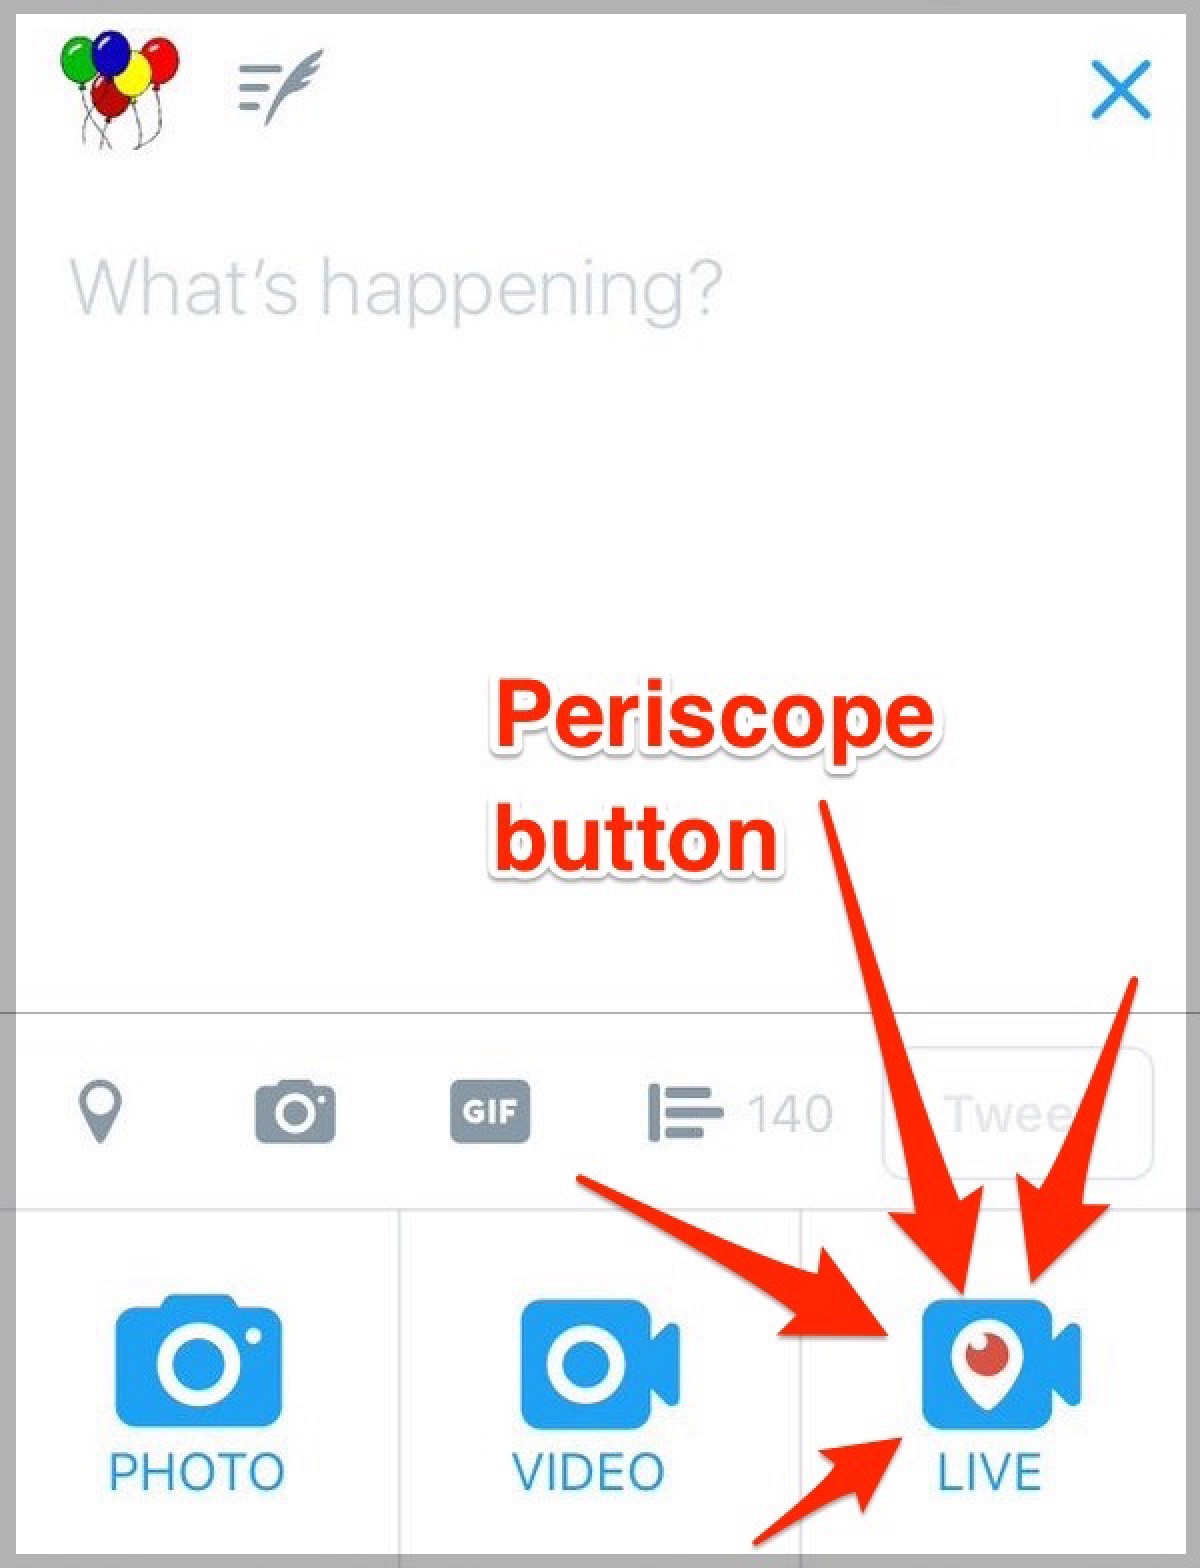 Twitter Go Live Periscope Button